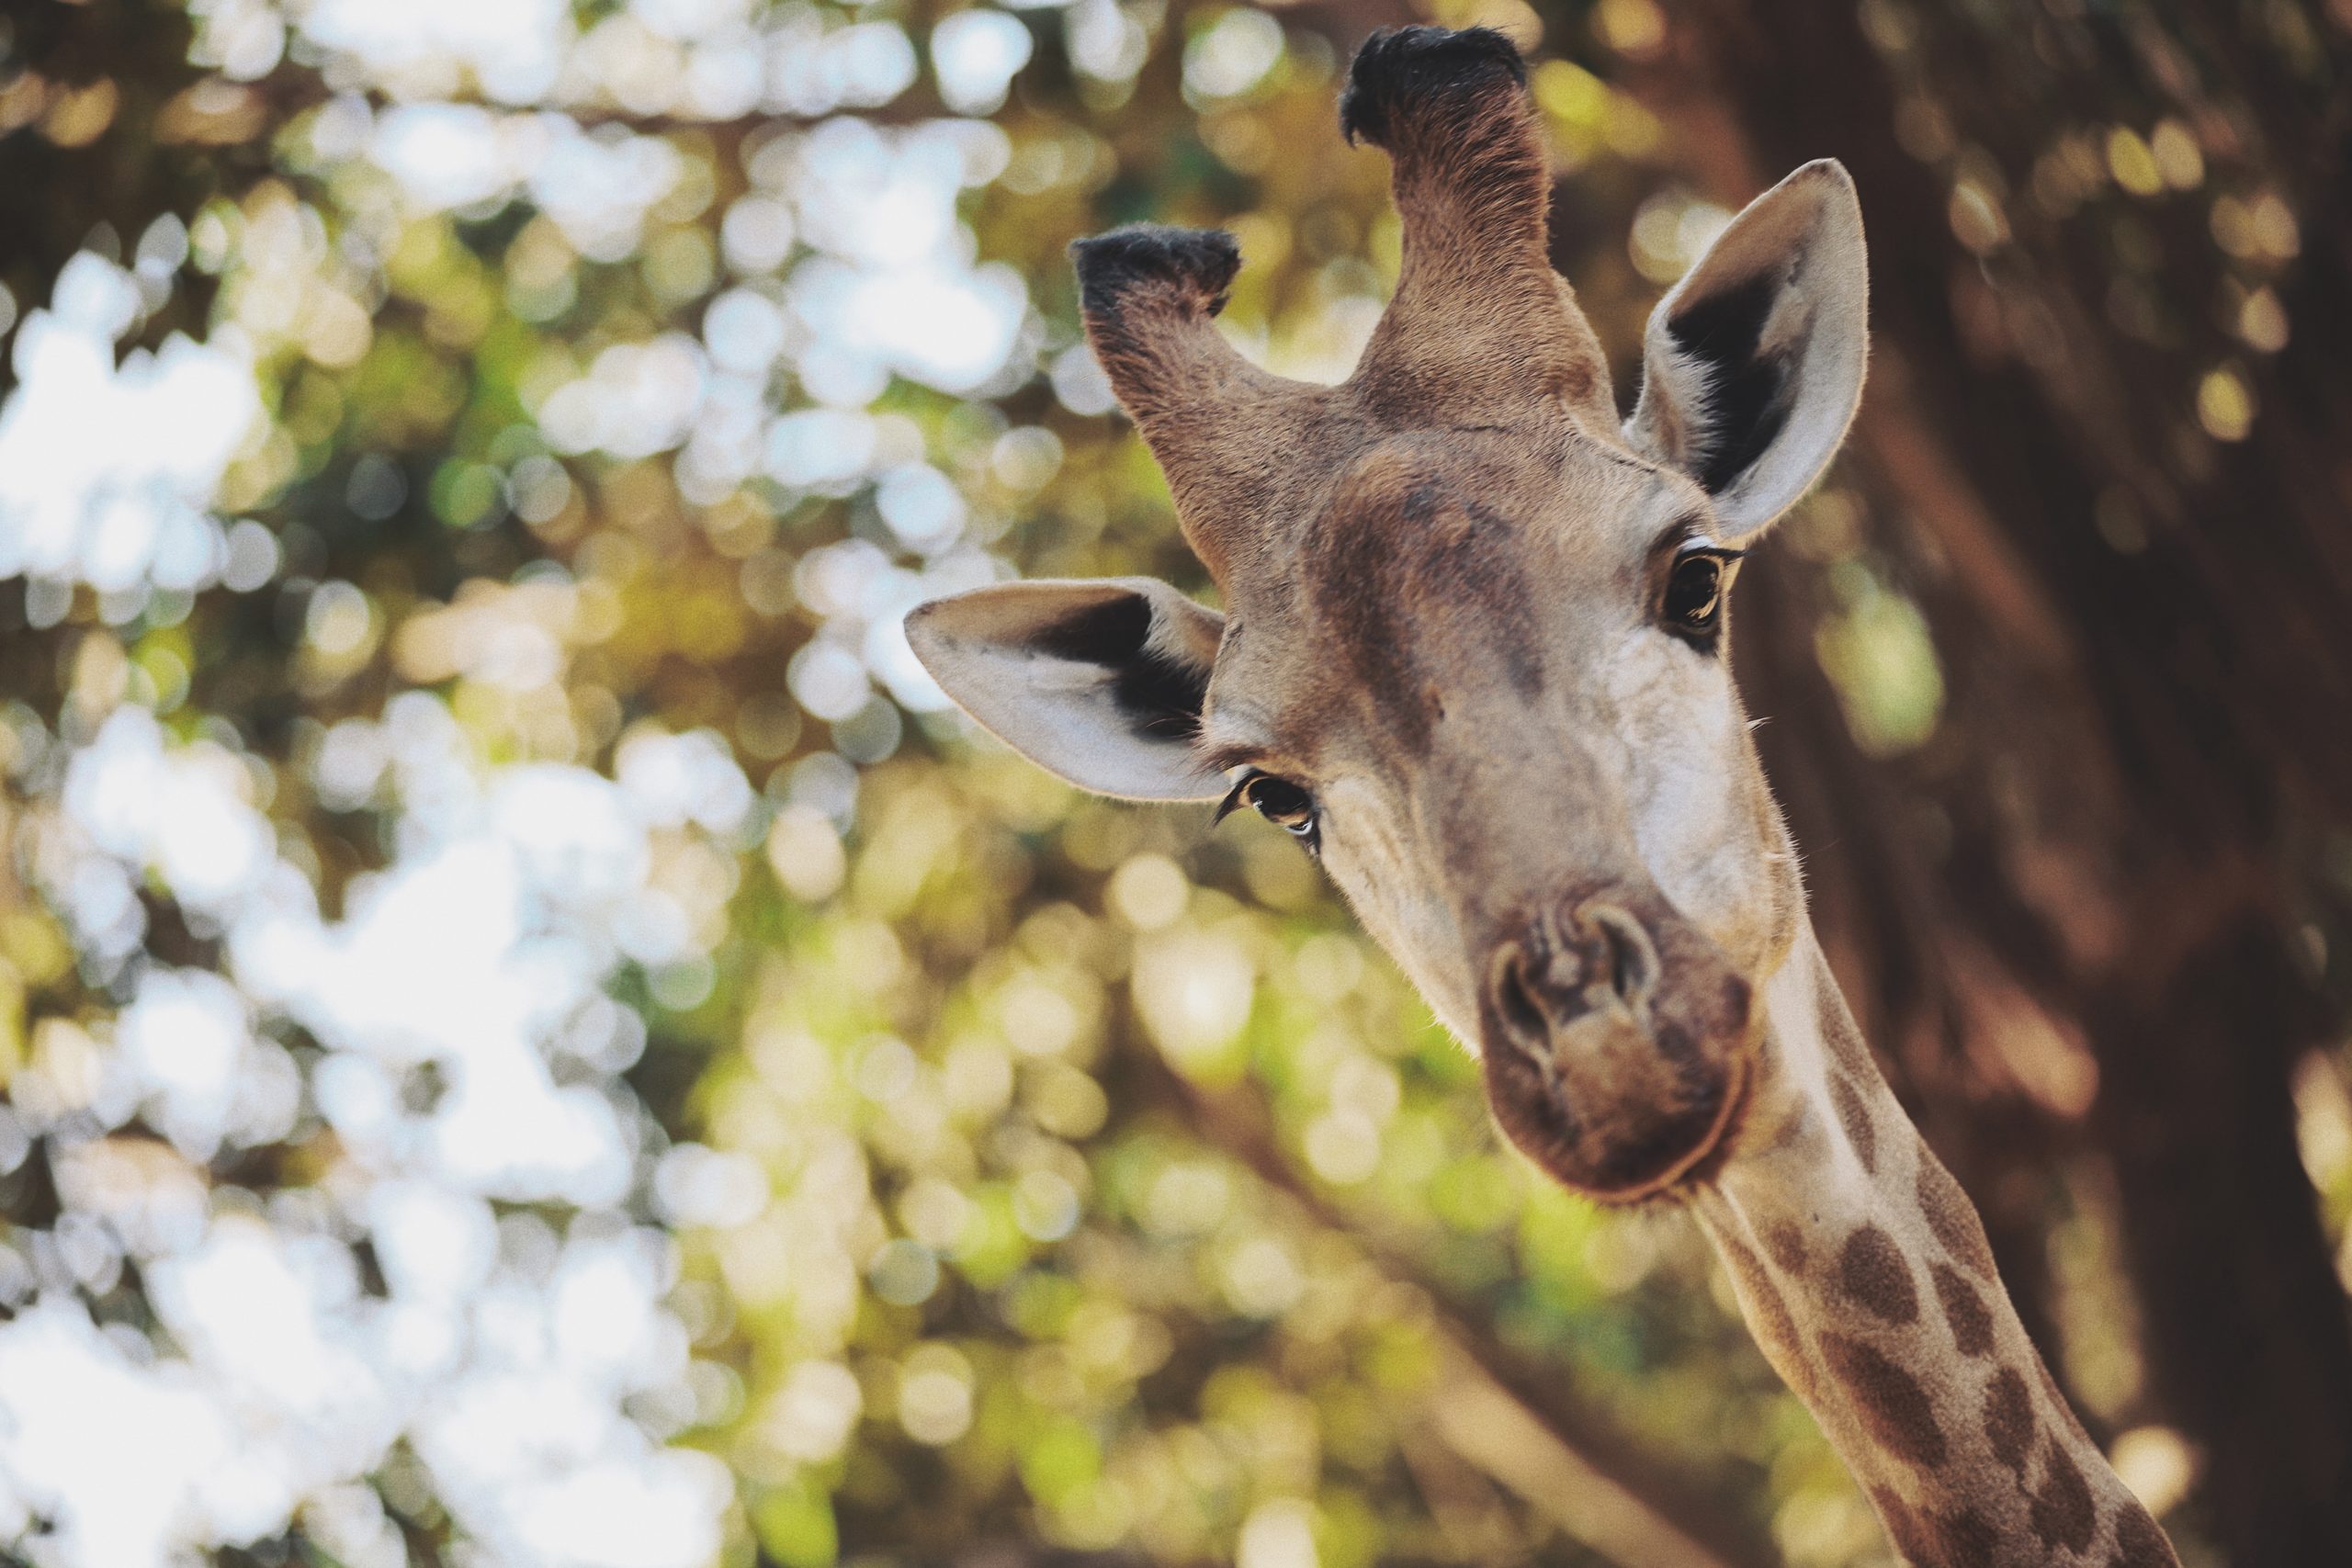 Giraffe: Photo by Teddy from Pexels